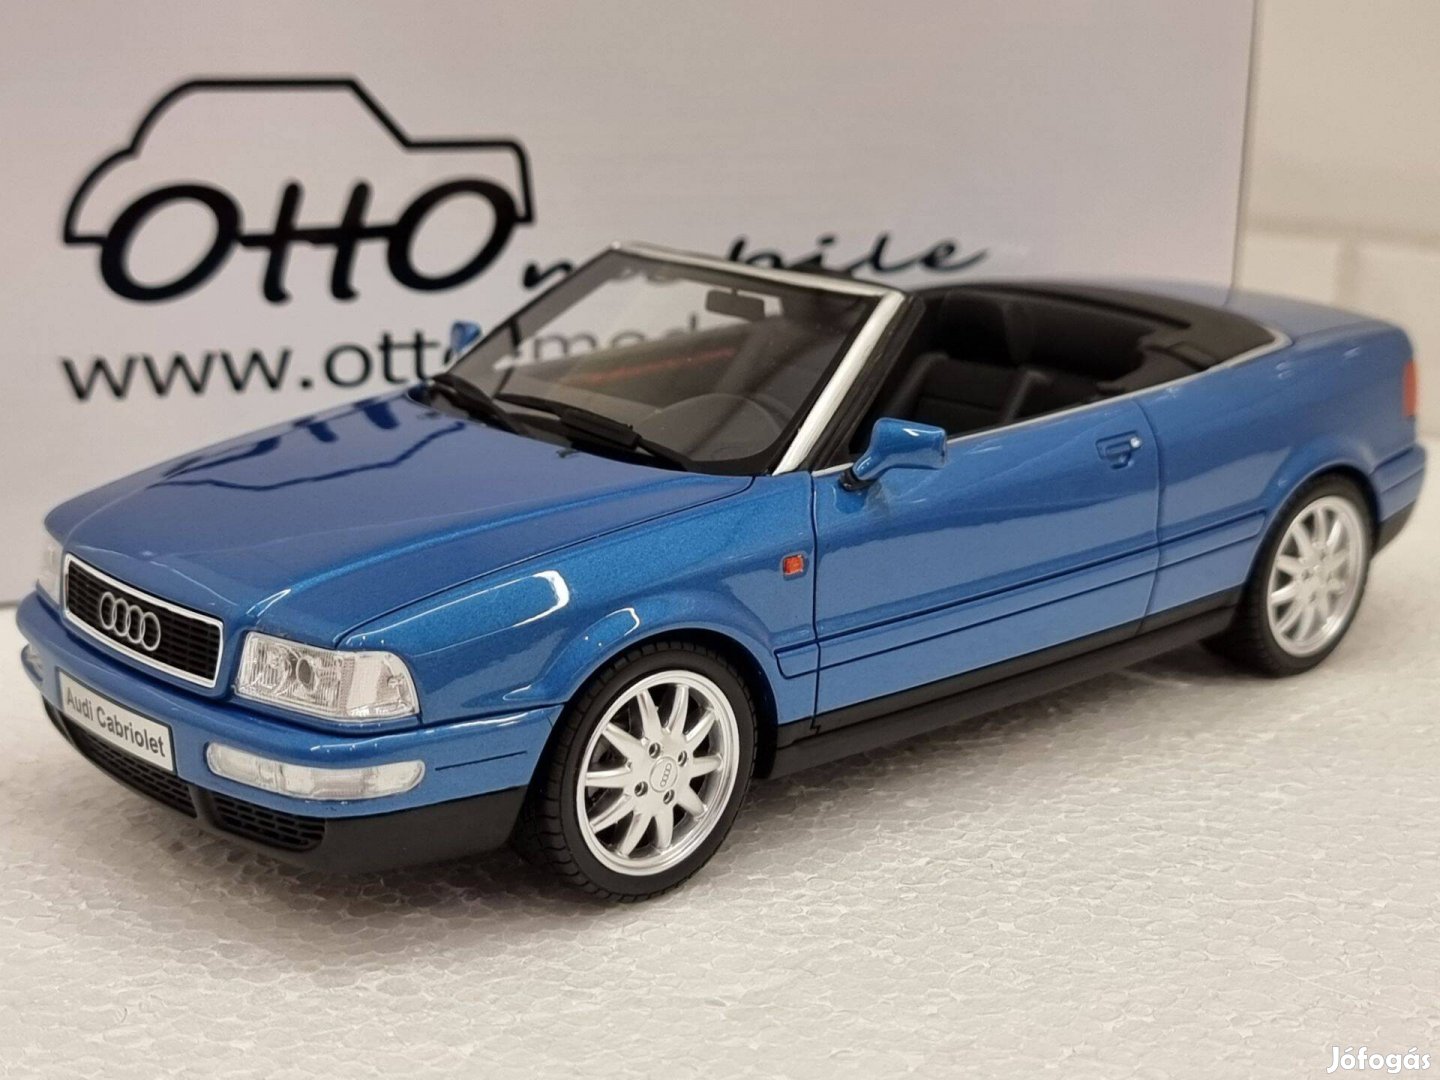 1/18 1:18 AUDI 80 (B4) Cabriolet, blue, 1998, Otto mobile model